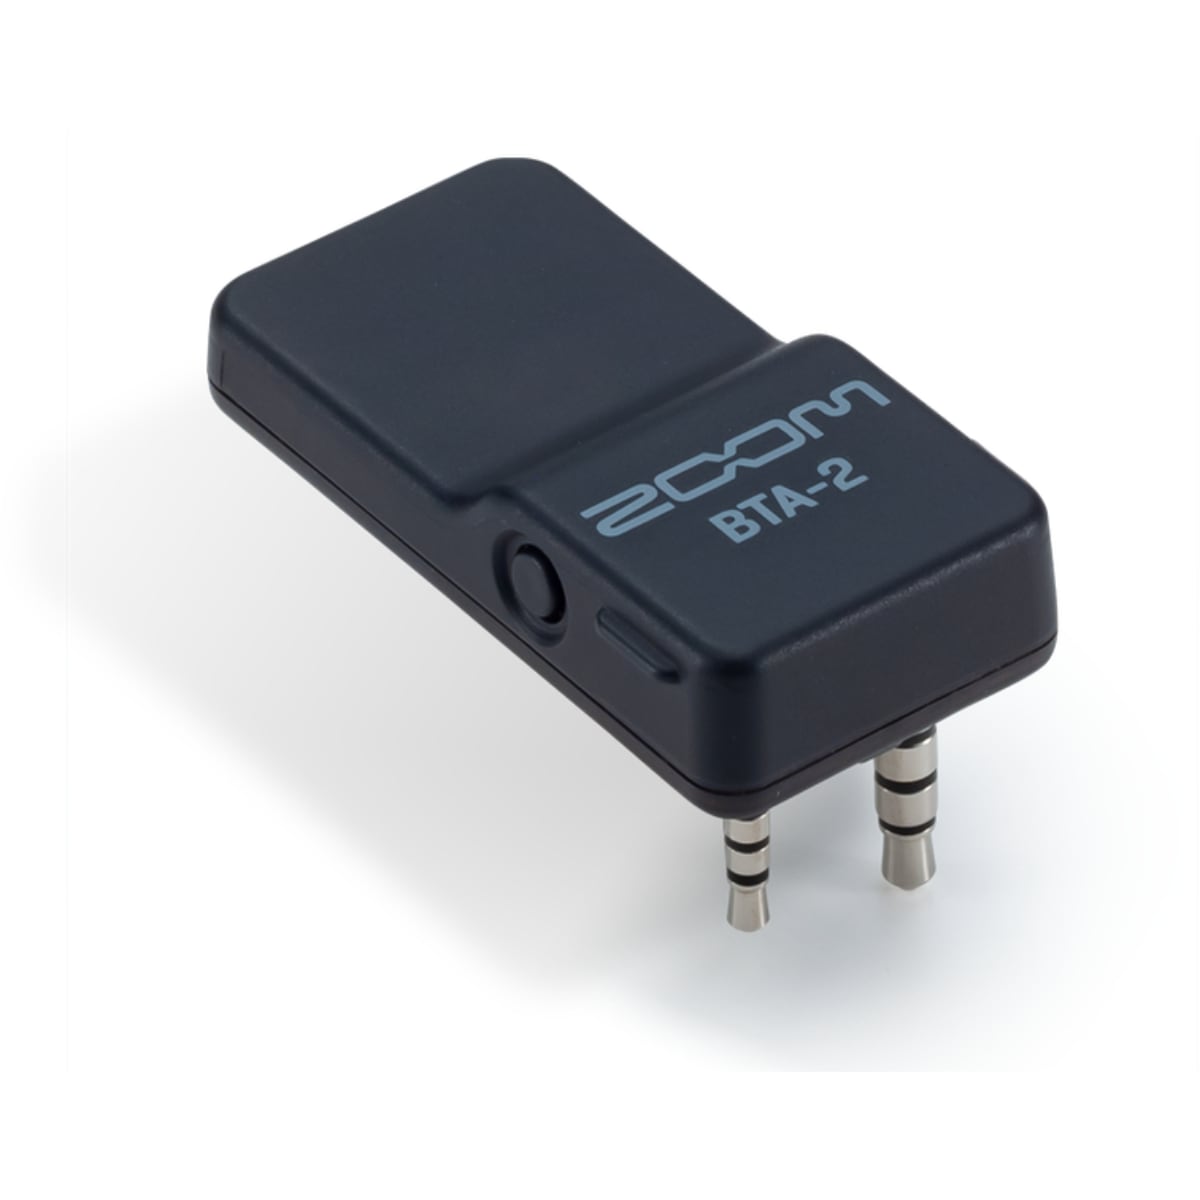 ZOOM BTA-2 Bluetooth Adapter For Podtrak Recorders